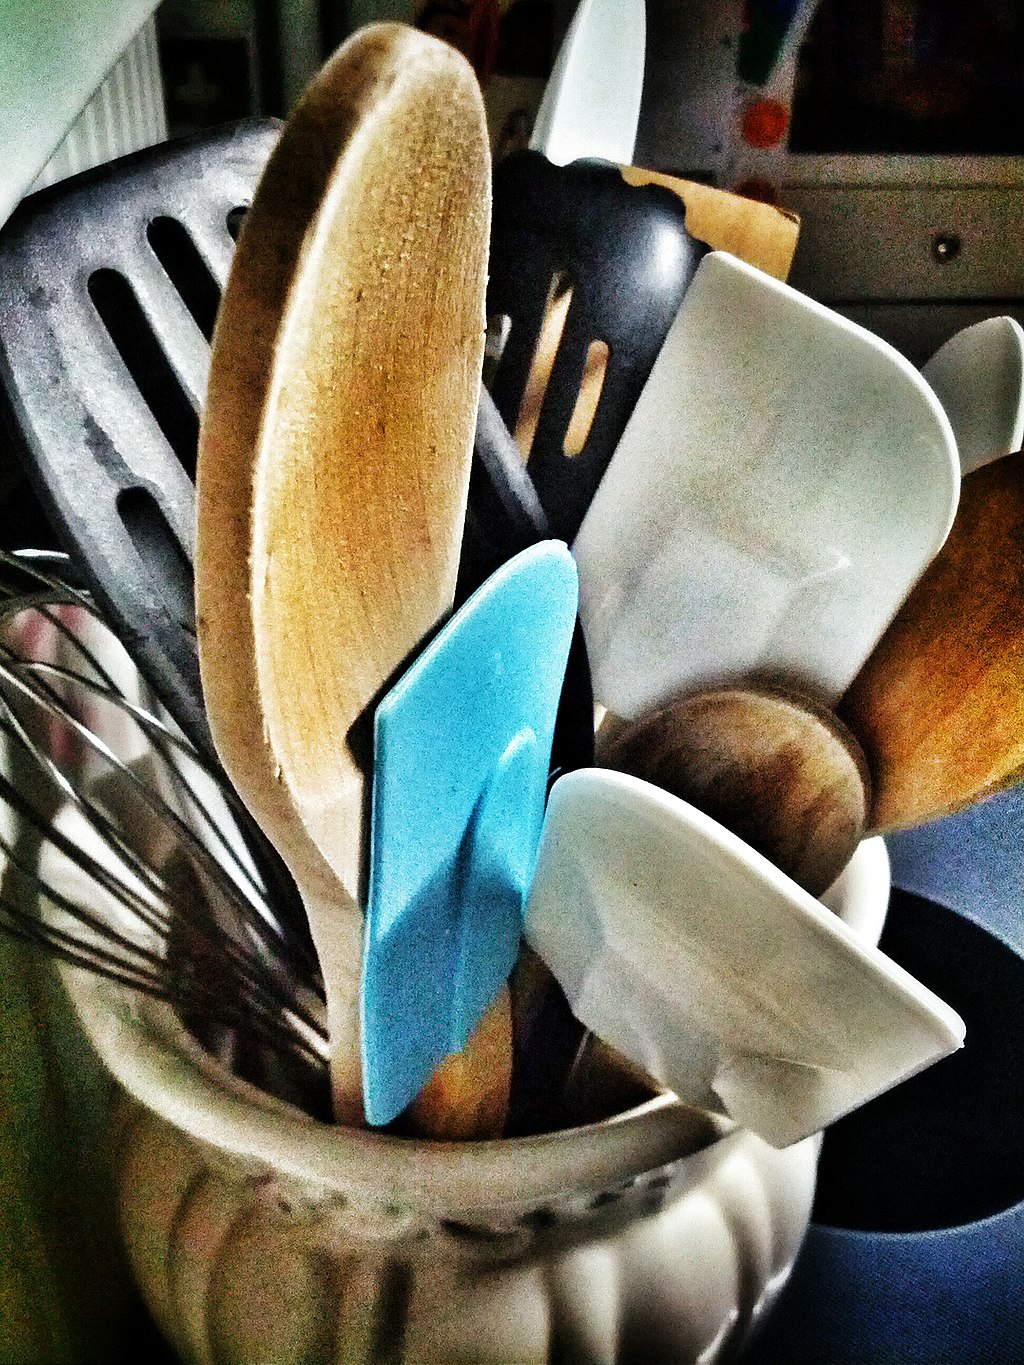 closeup of kitchen utensils in a jar